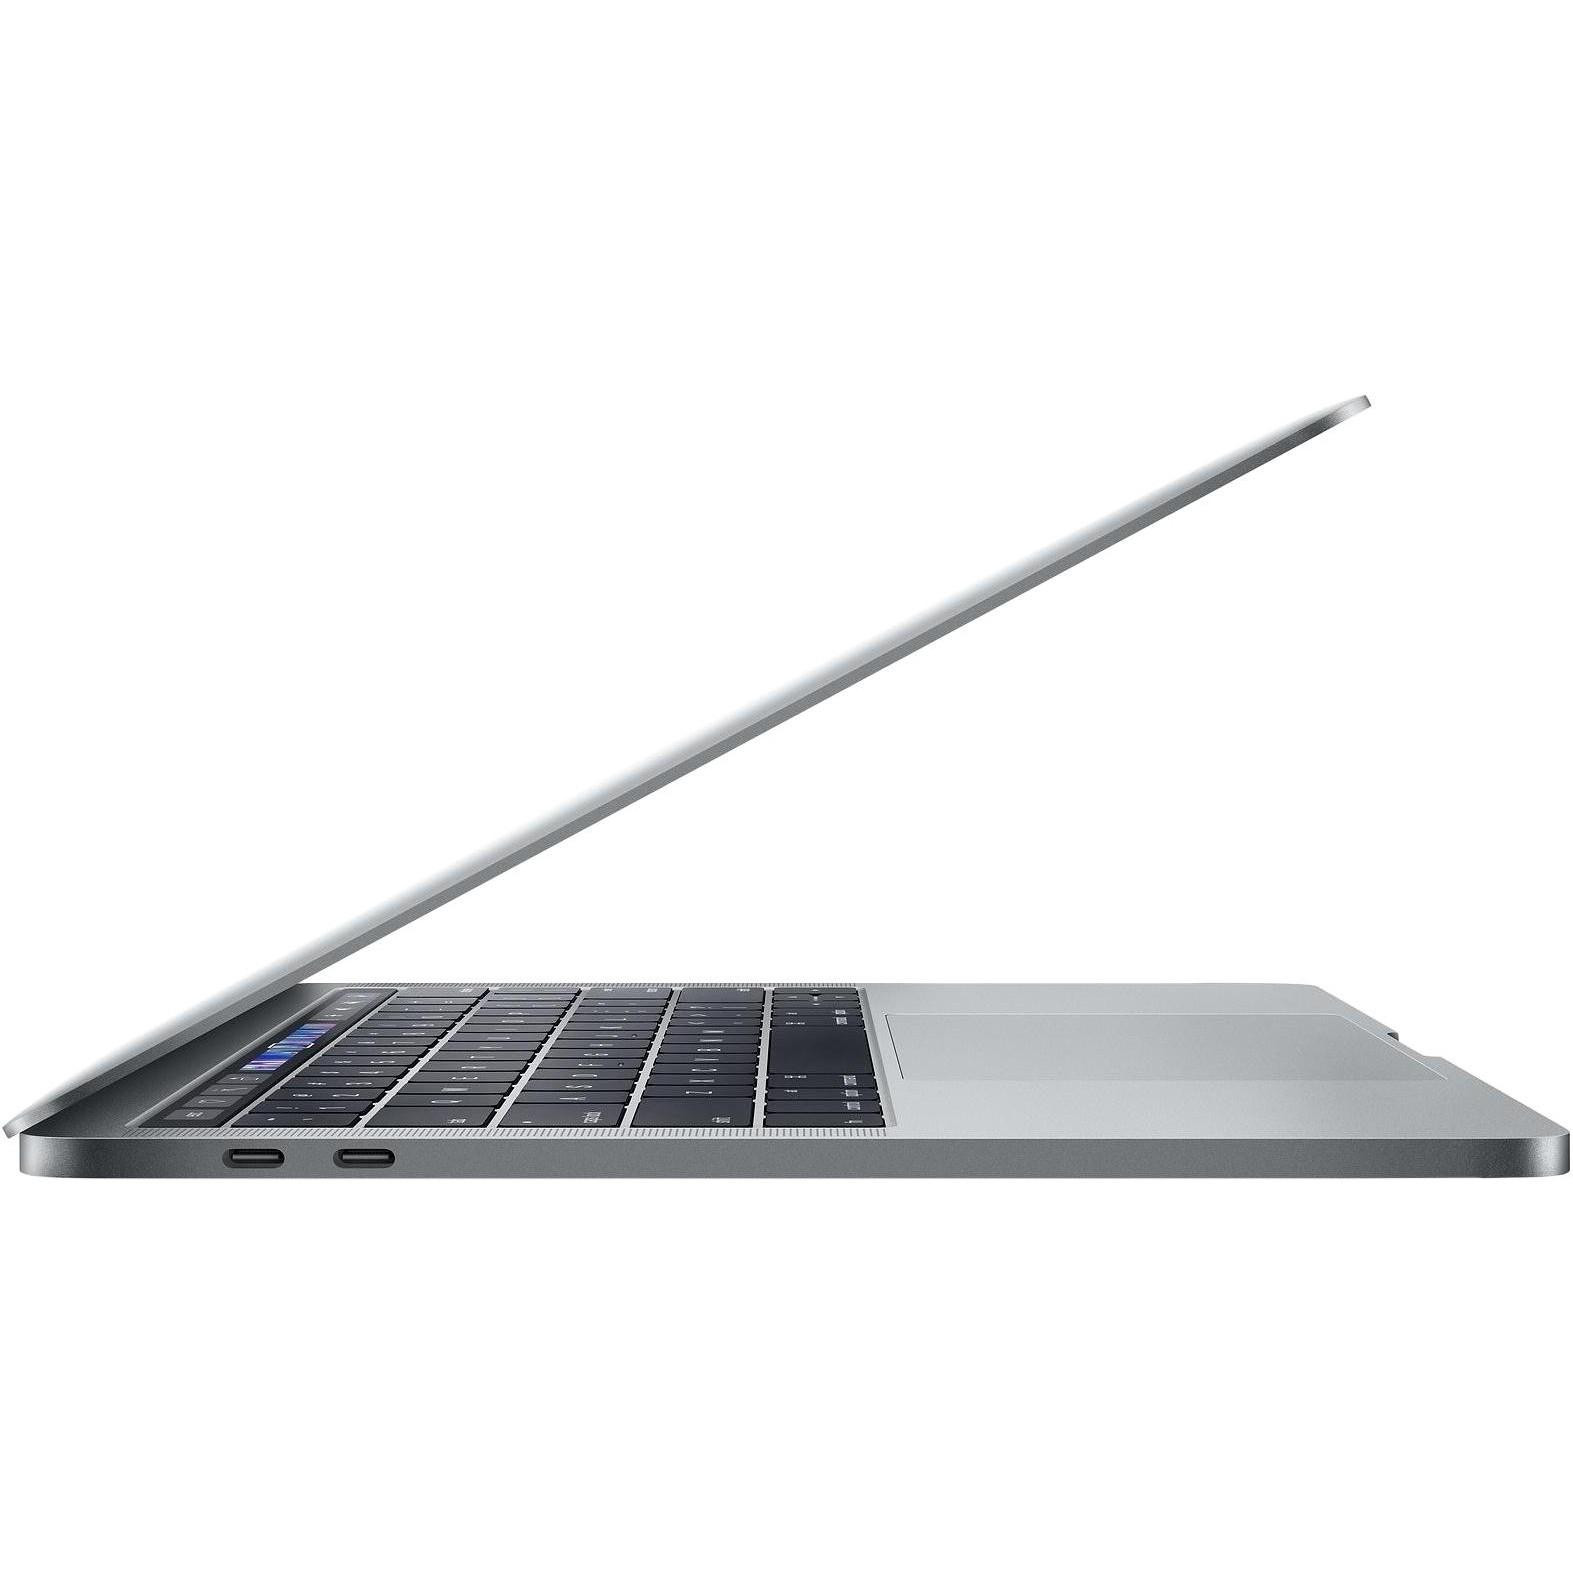 Apple MacBook Pro 15" Space Gray 2019 (Z0WW001HH)